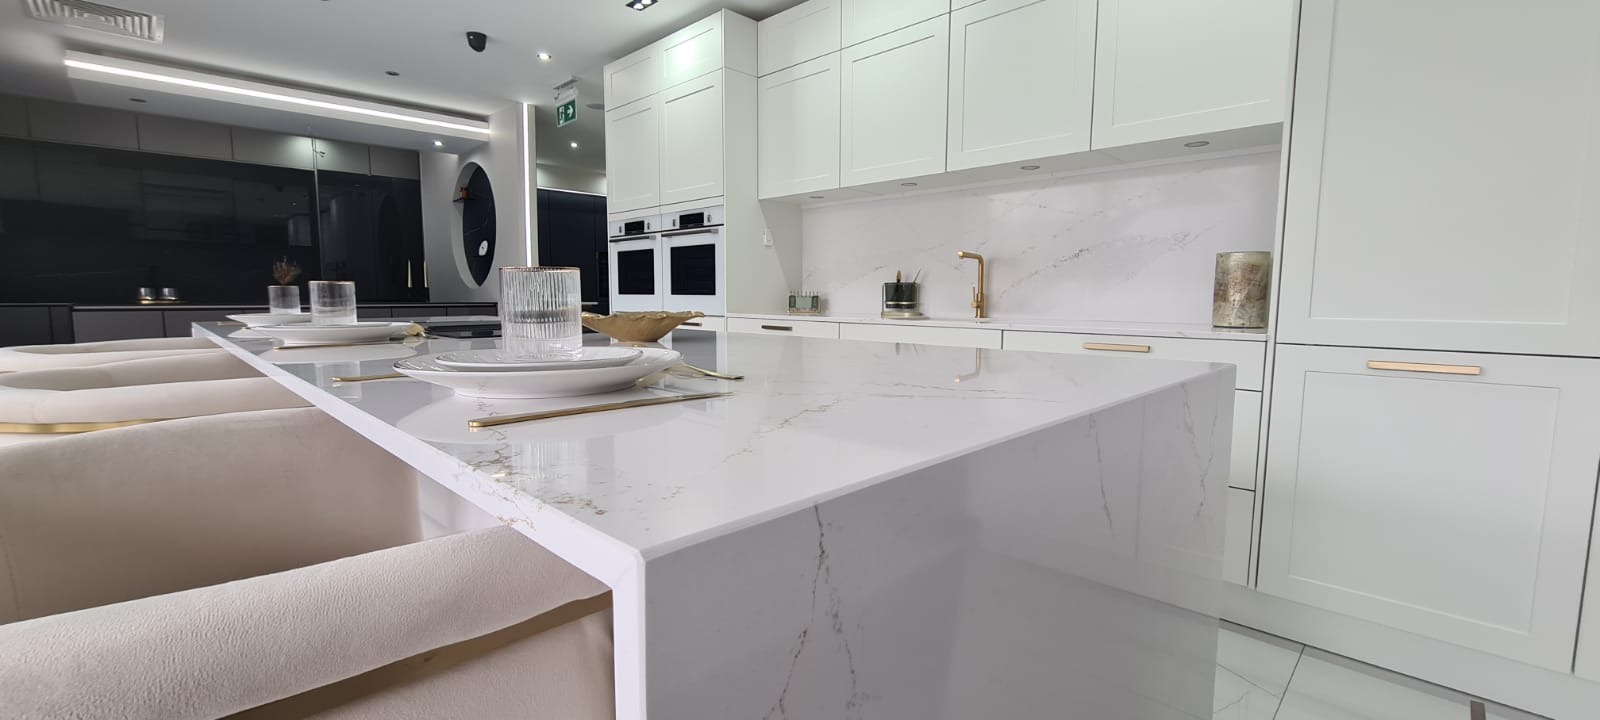 Perfectly finished edge on white quartz kitchen worktops